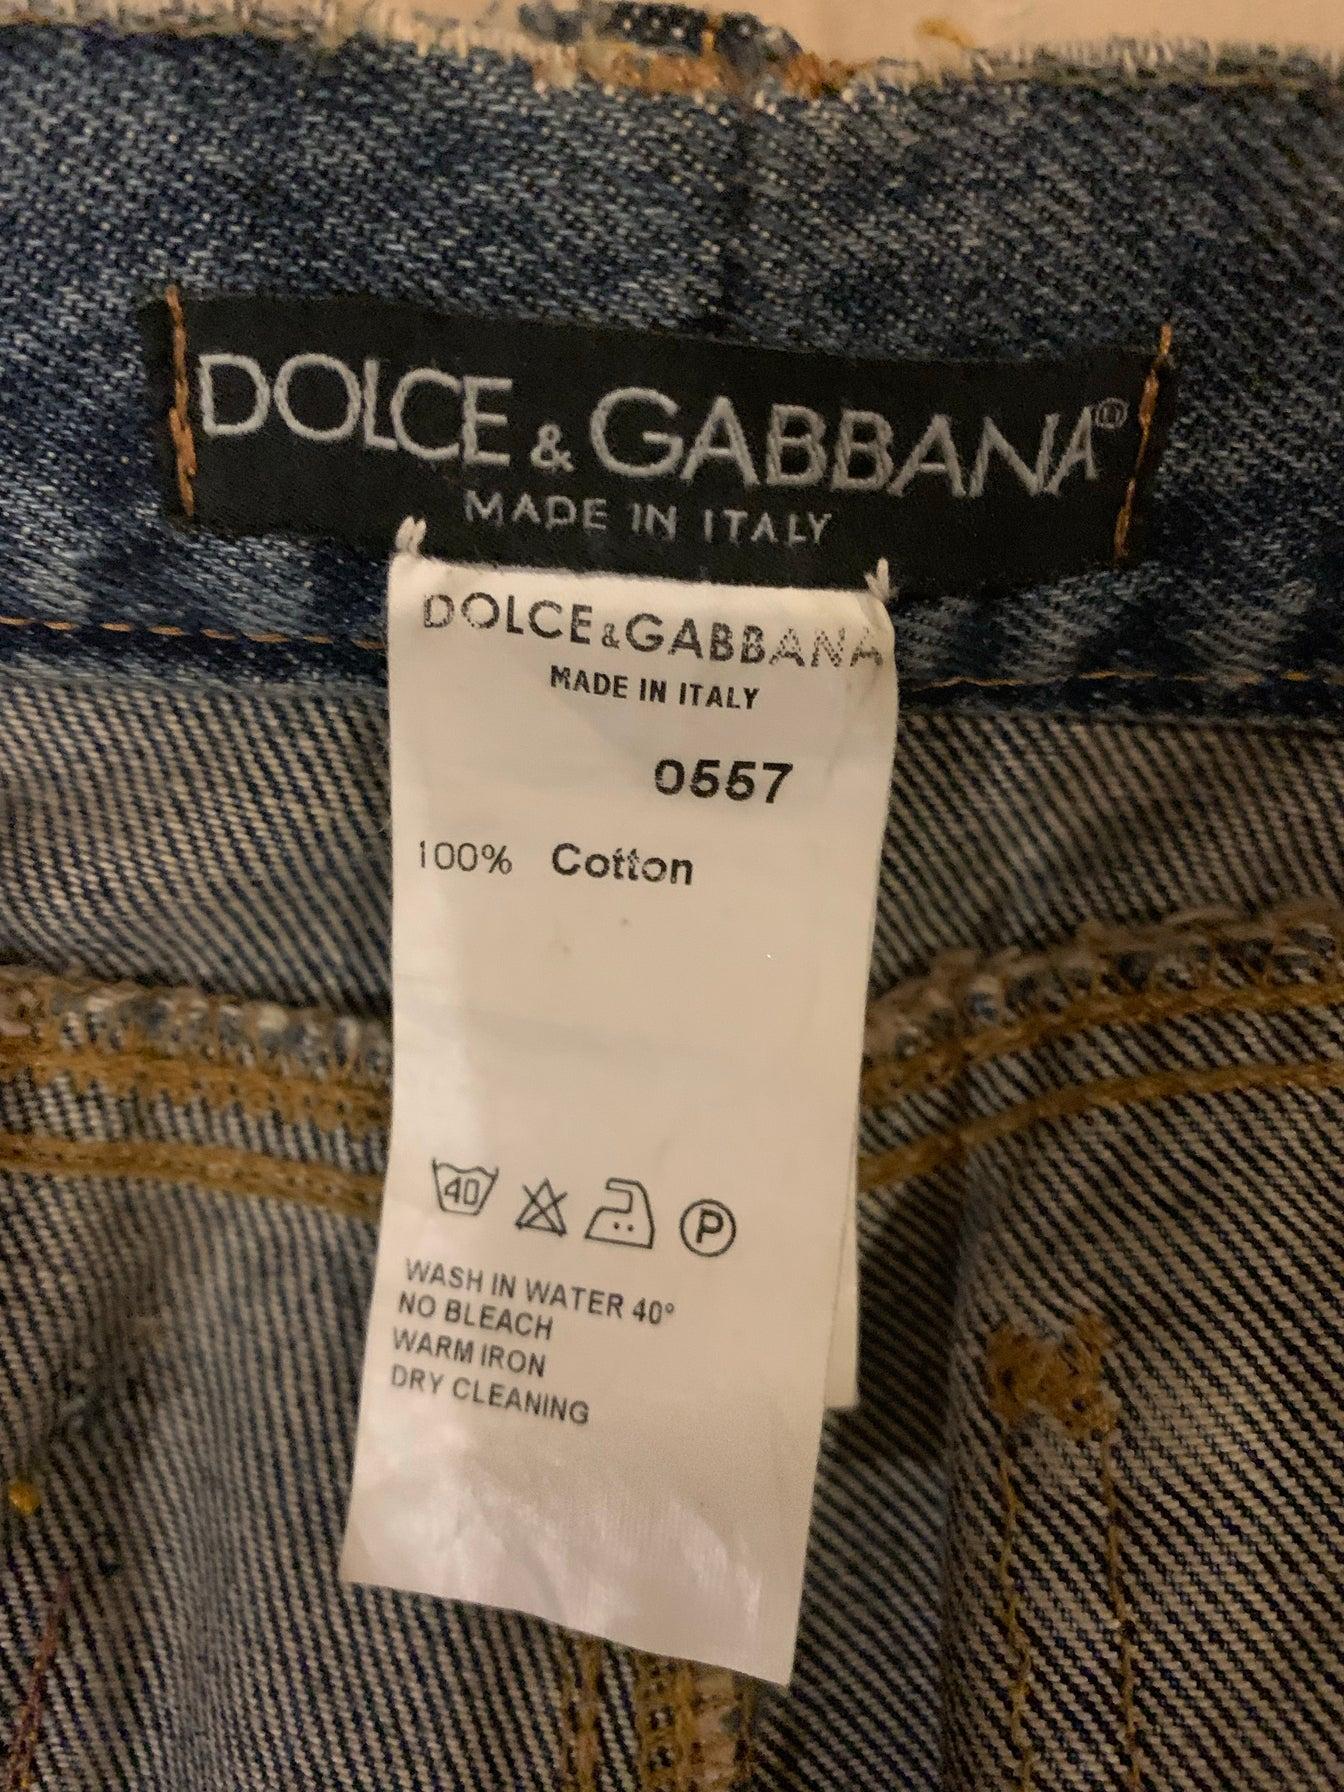 Dolce & Gabbana SS 2001 Graffiti Punk Jeans with Safety Pins 2